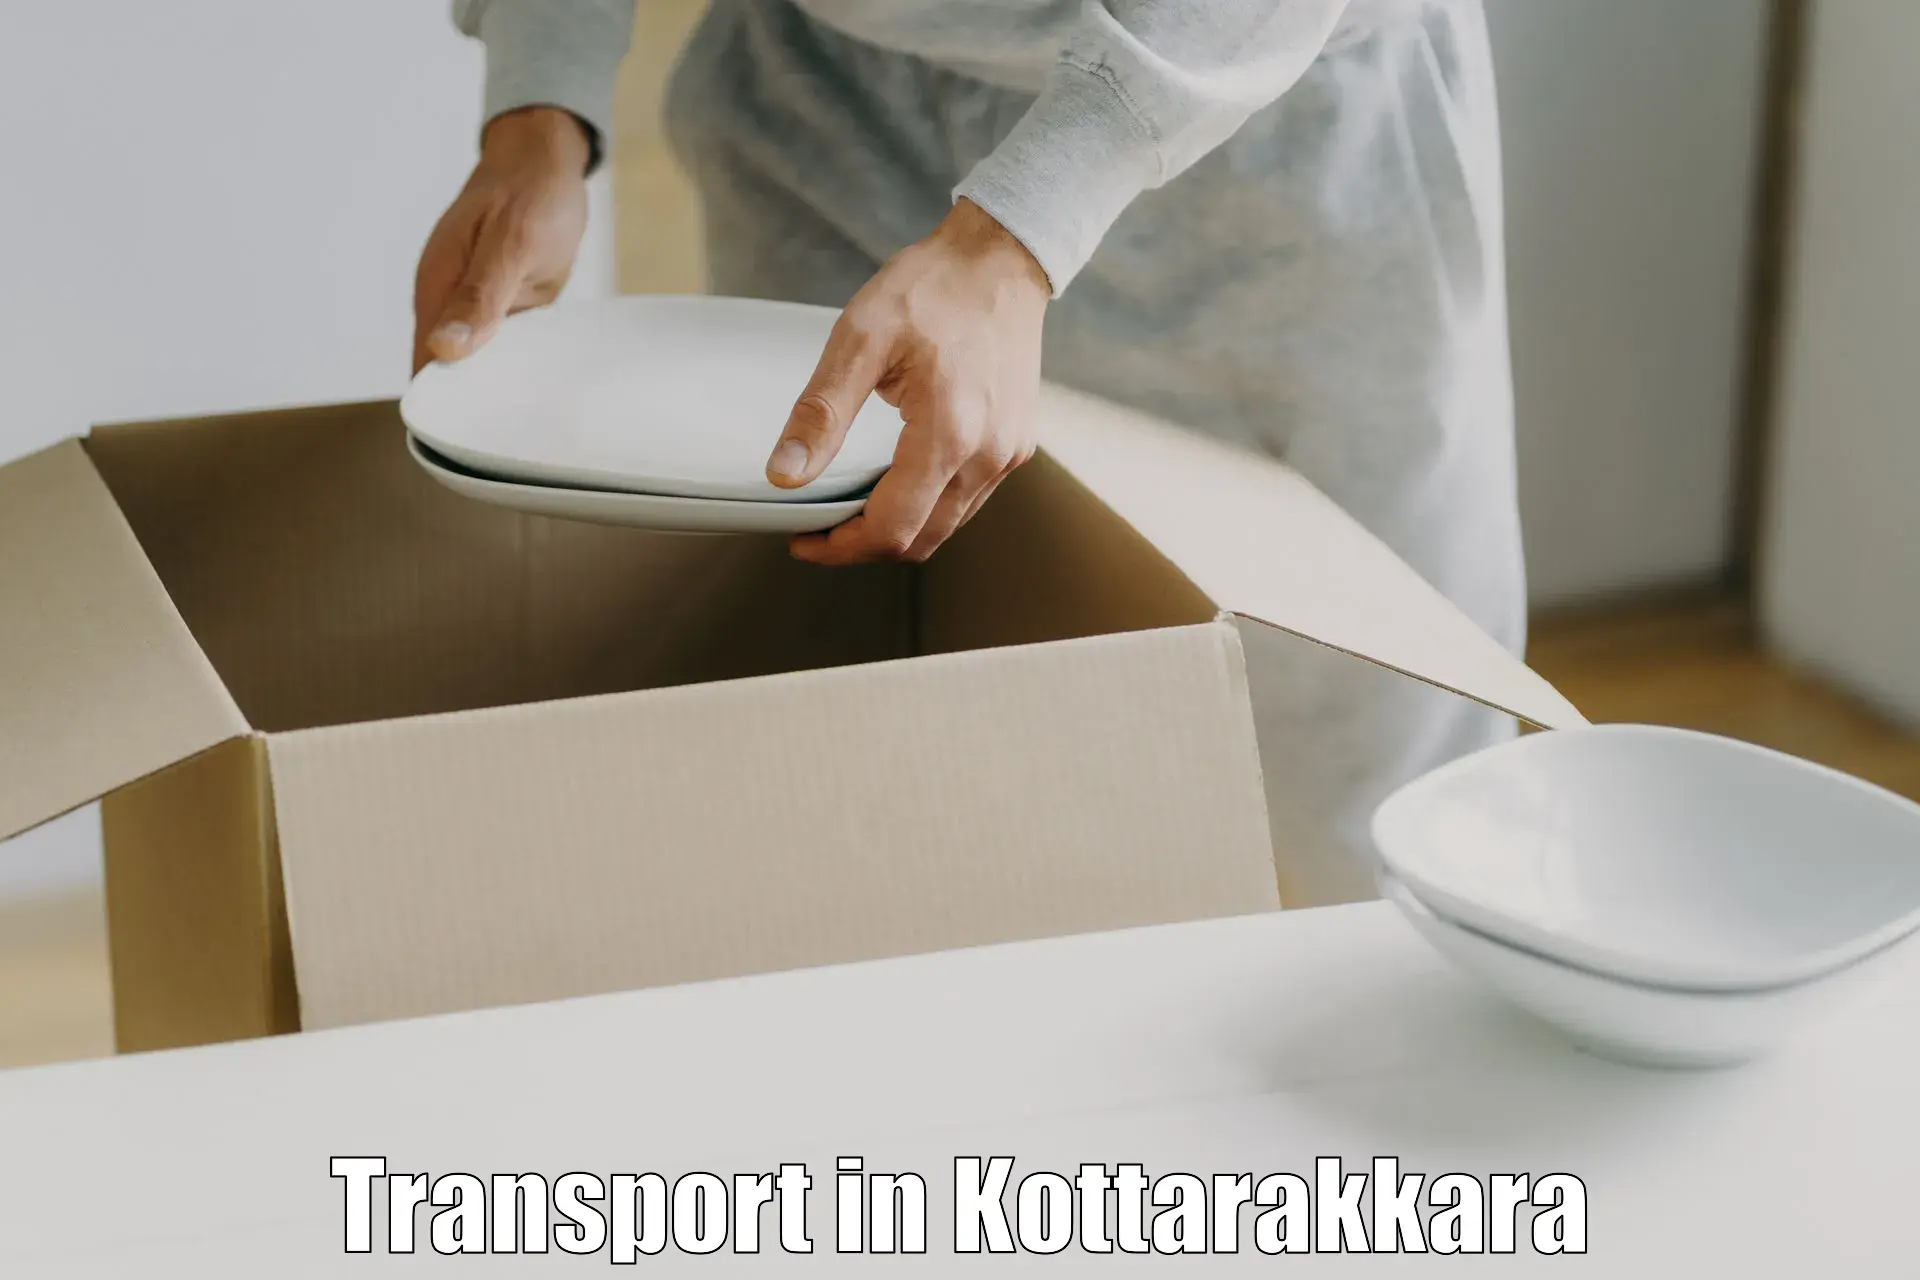 Cycle transportation service in Kottarakkara